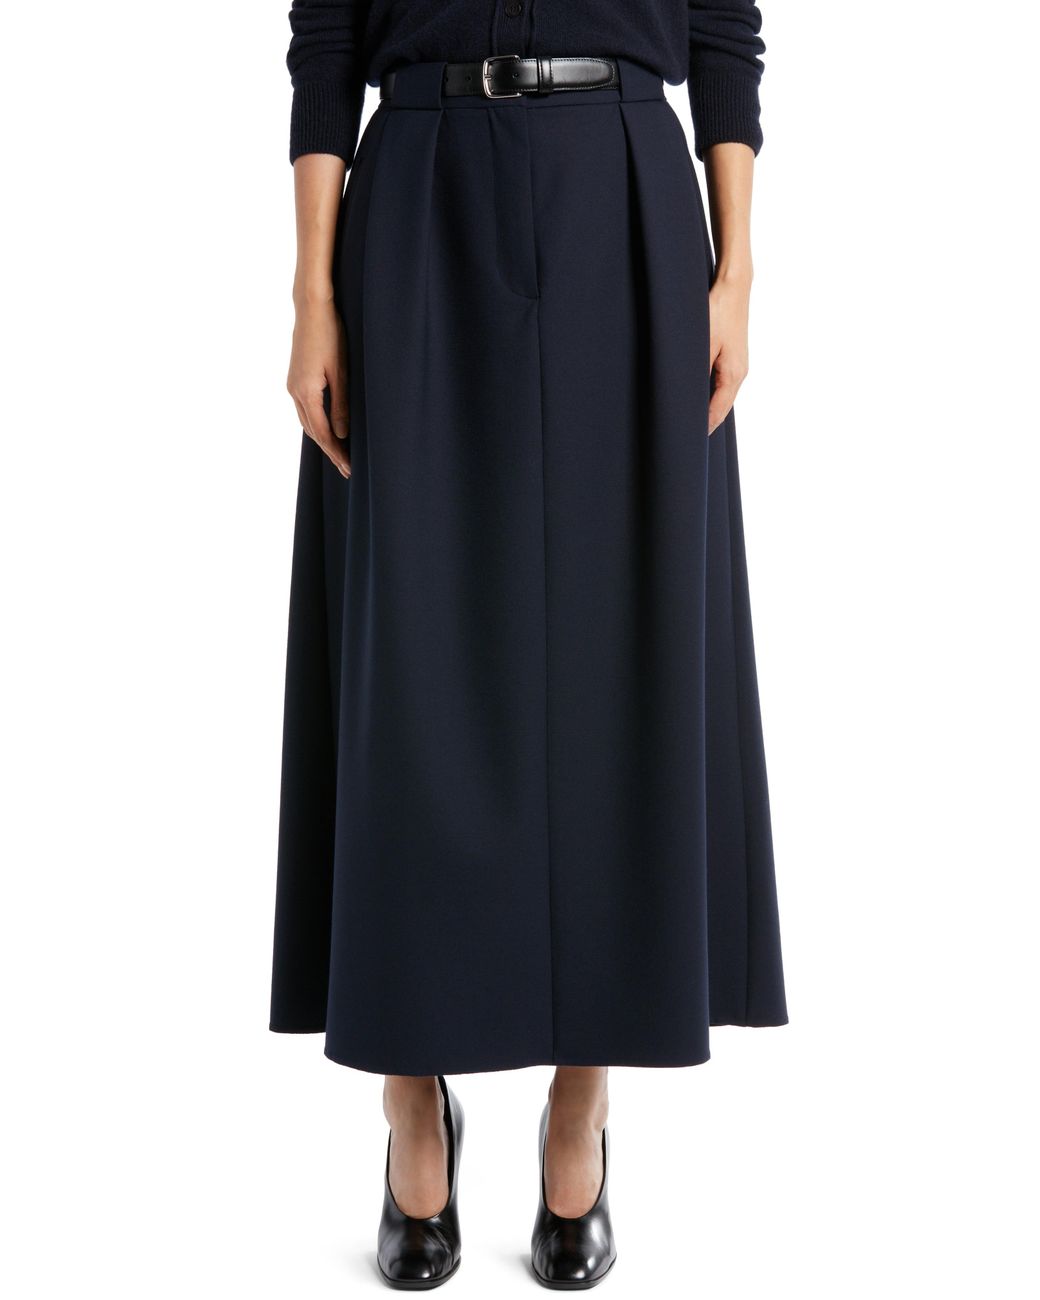 The Row Jaako Pleated Stretch Wool Skirt in Dark Navy (Blue) - Lyst